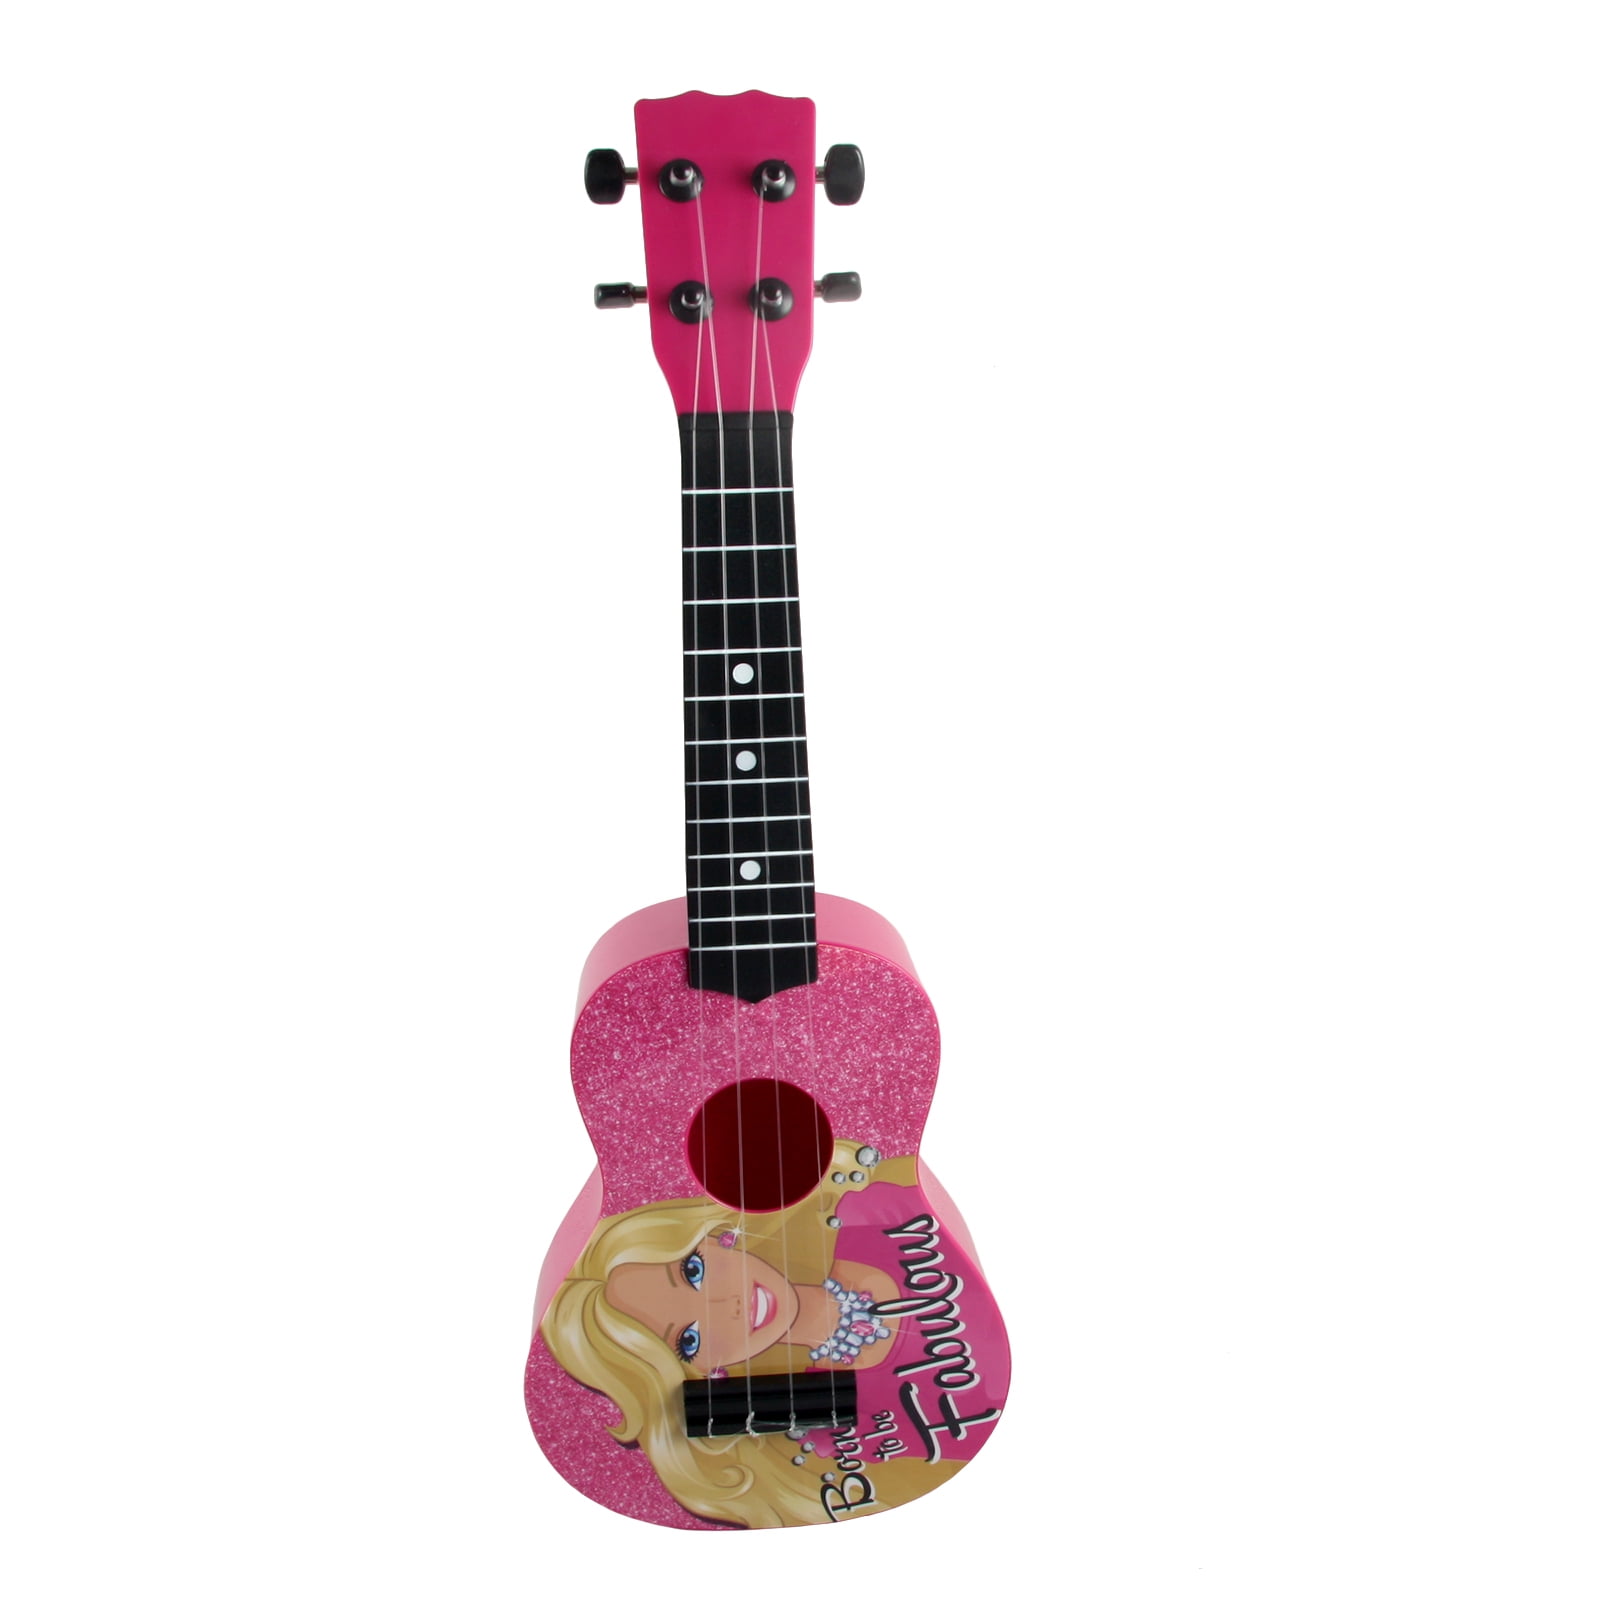 barbie guitar